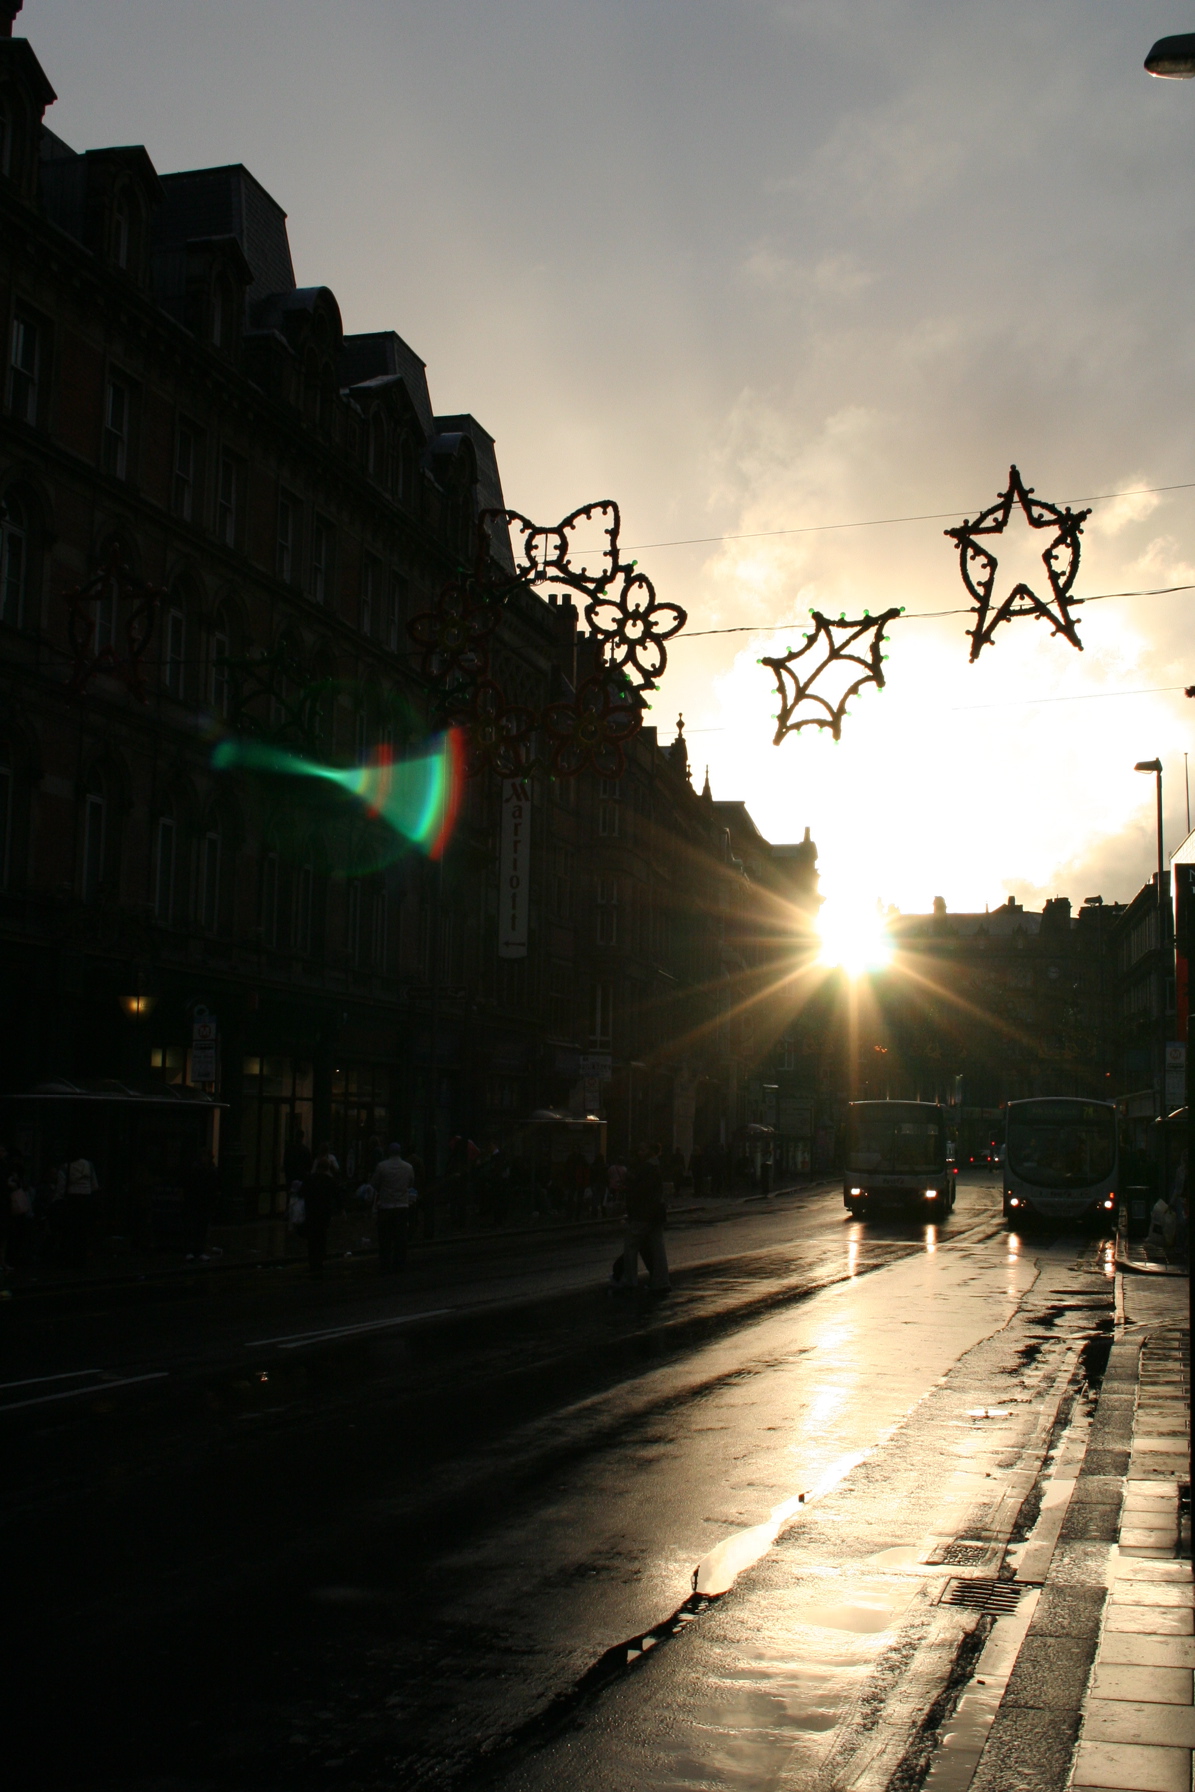 Christmas jingle in the street photo